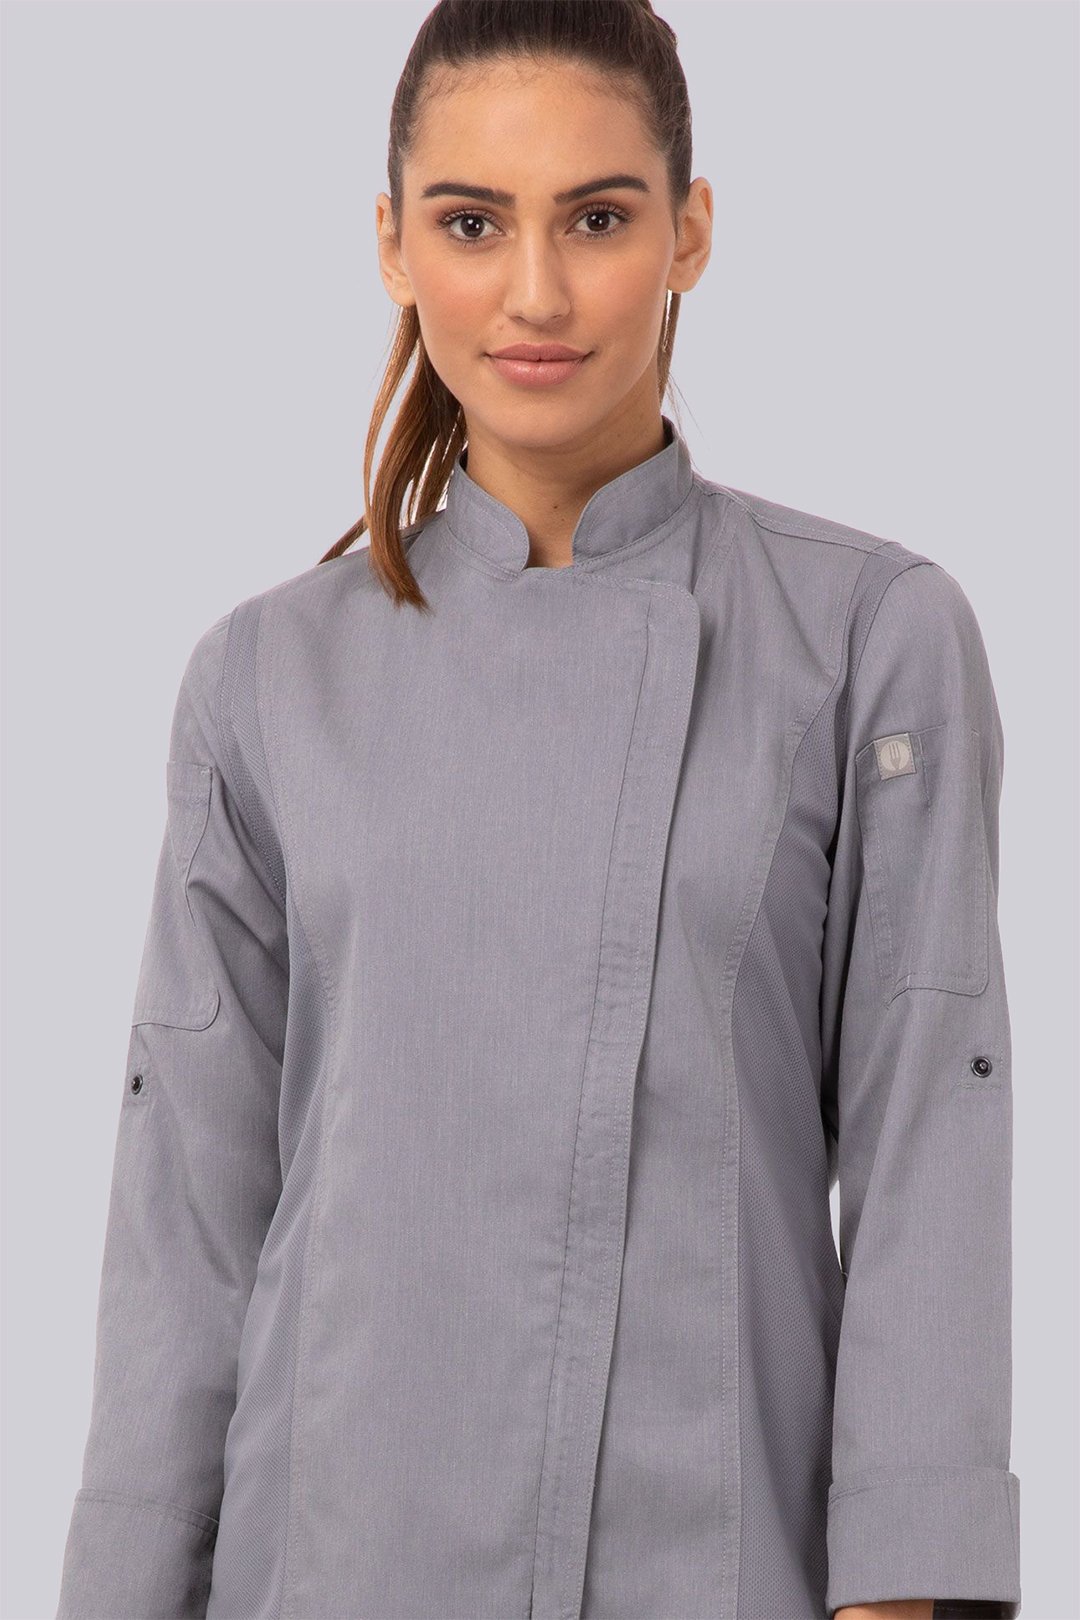 Ladies Long Sleeve Chefs Jacket 